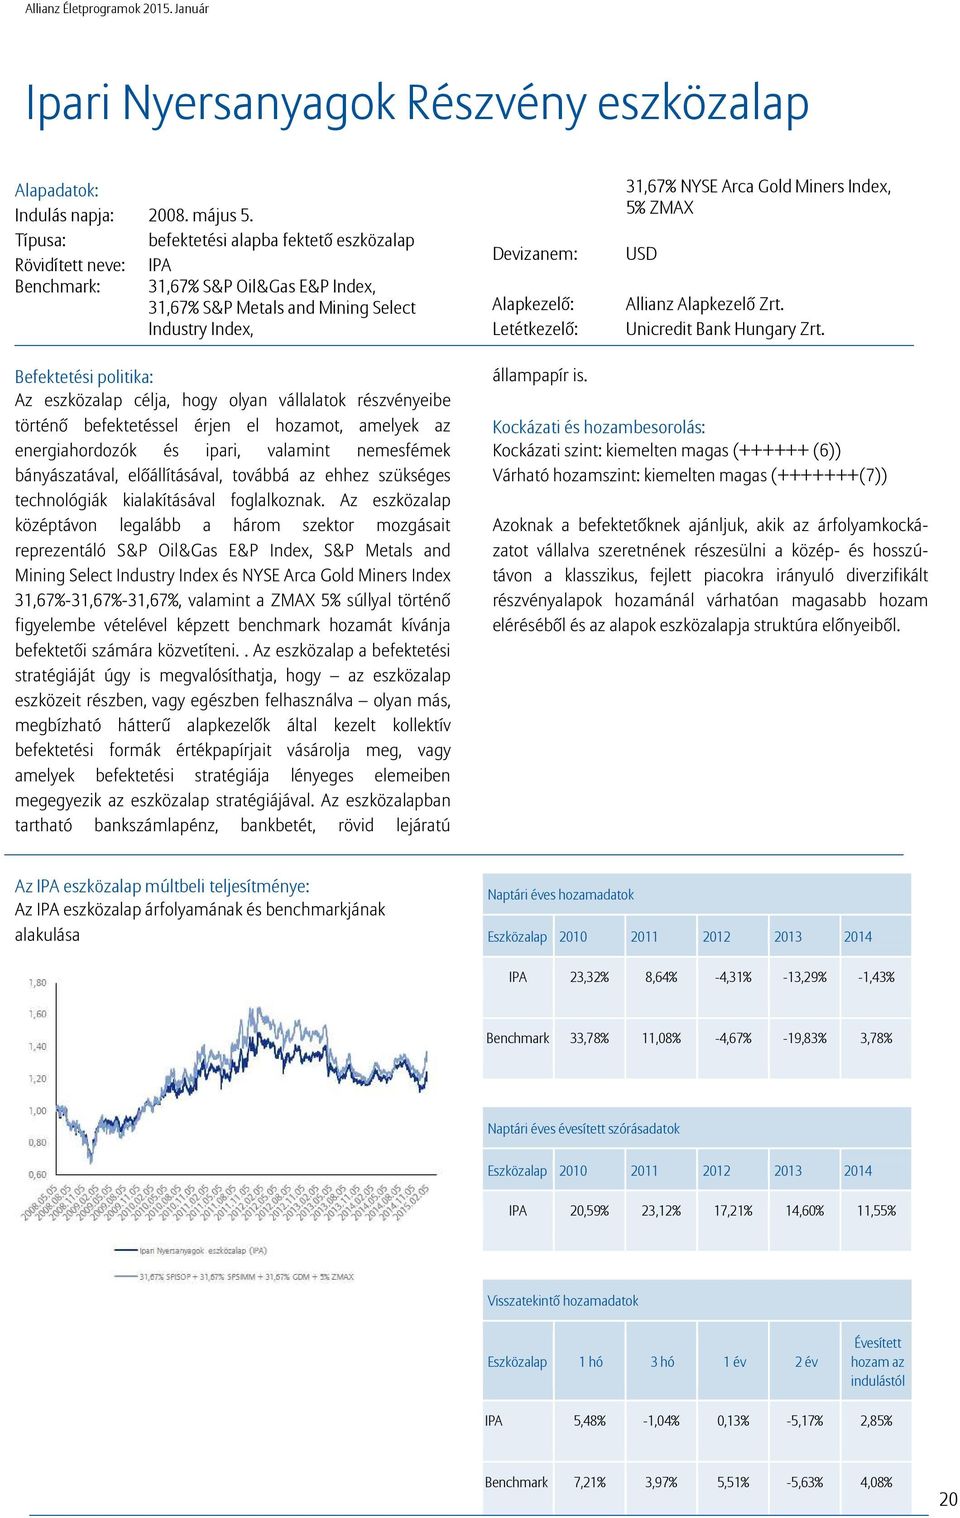 31,67% NYSE Arca Gold Miners Index, 5% ZMAX USD Allianz Alapkezelő Zrt. Unicredit Bank Hungary Zrt.